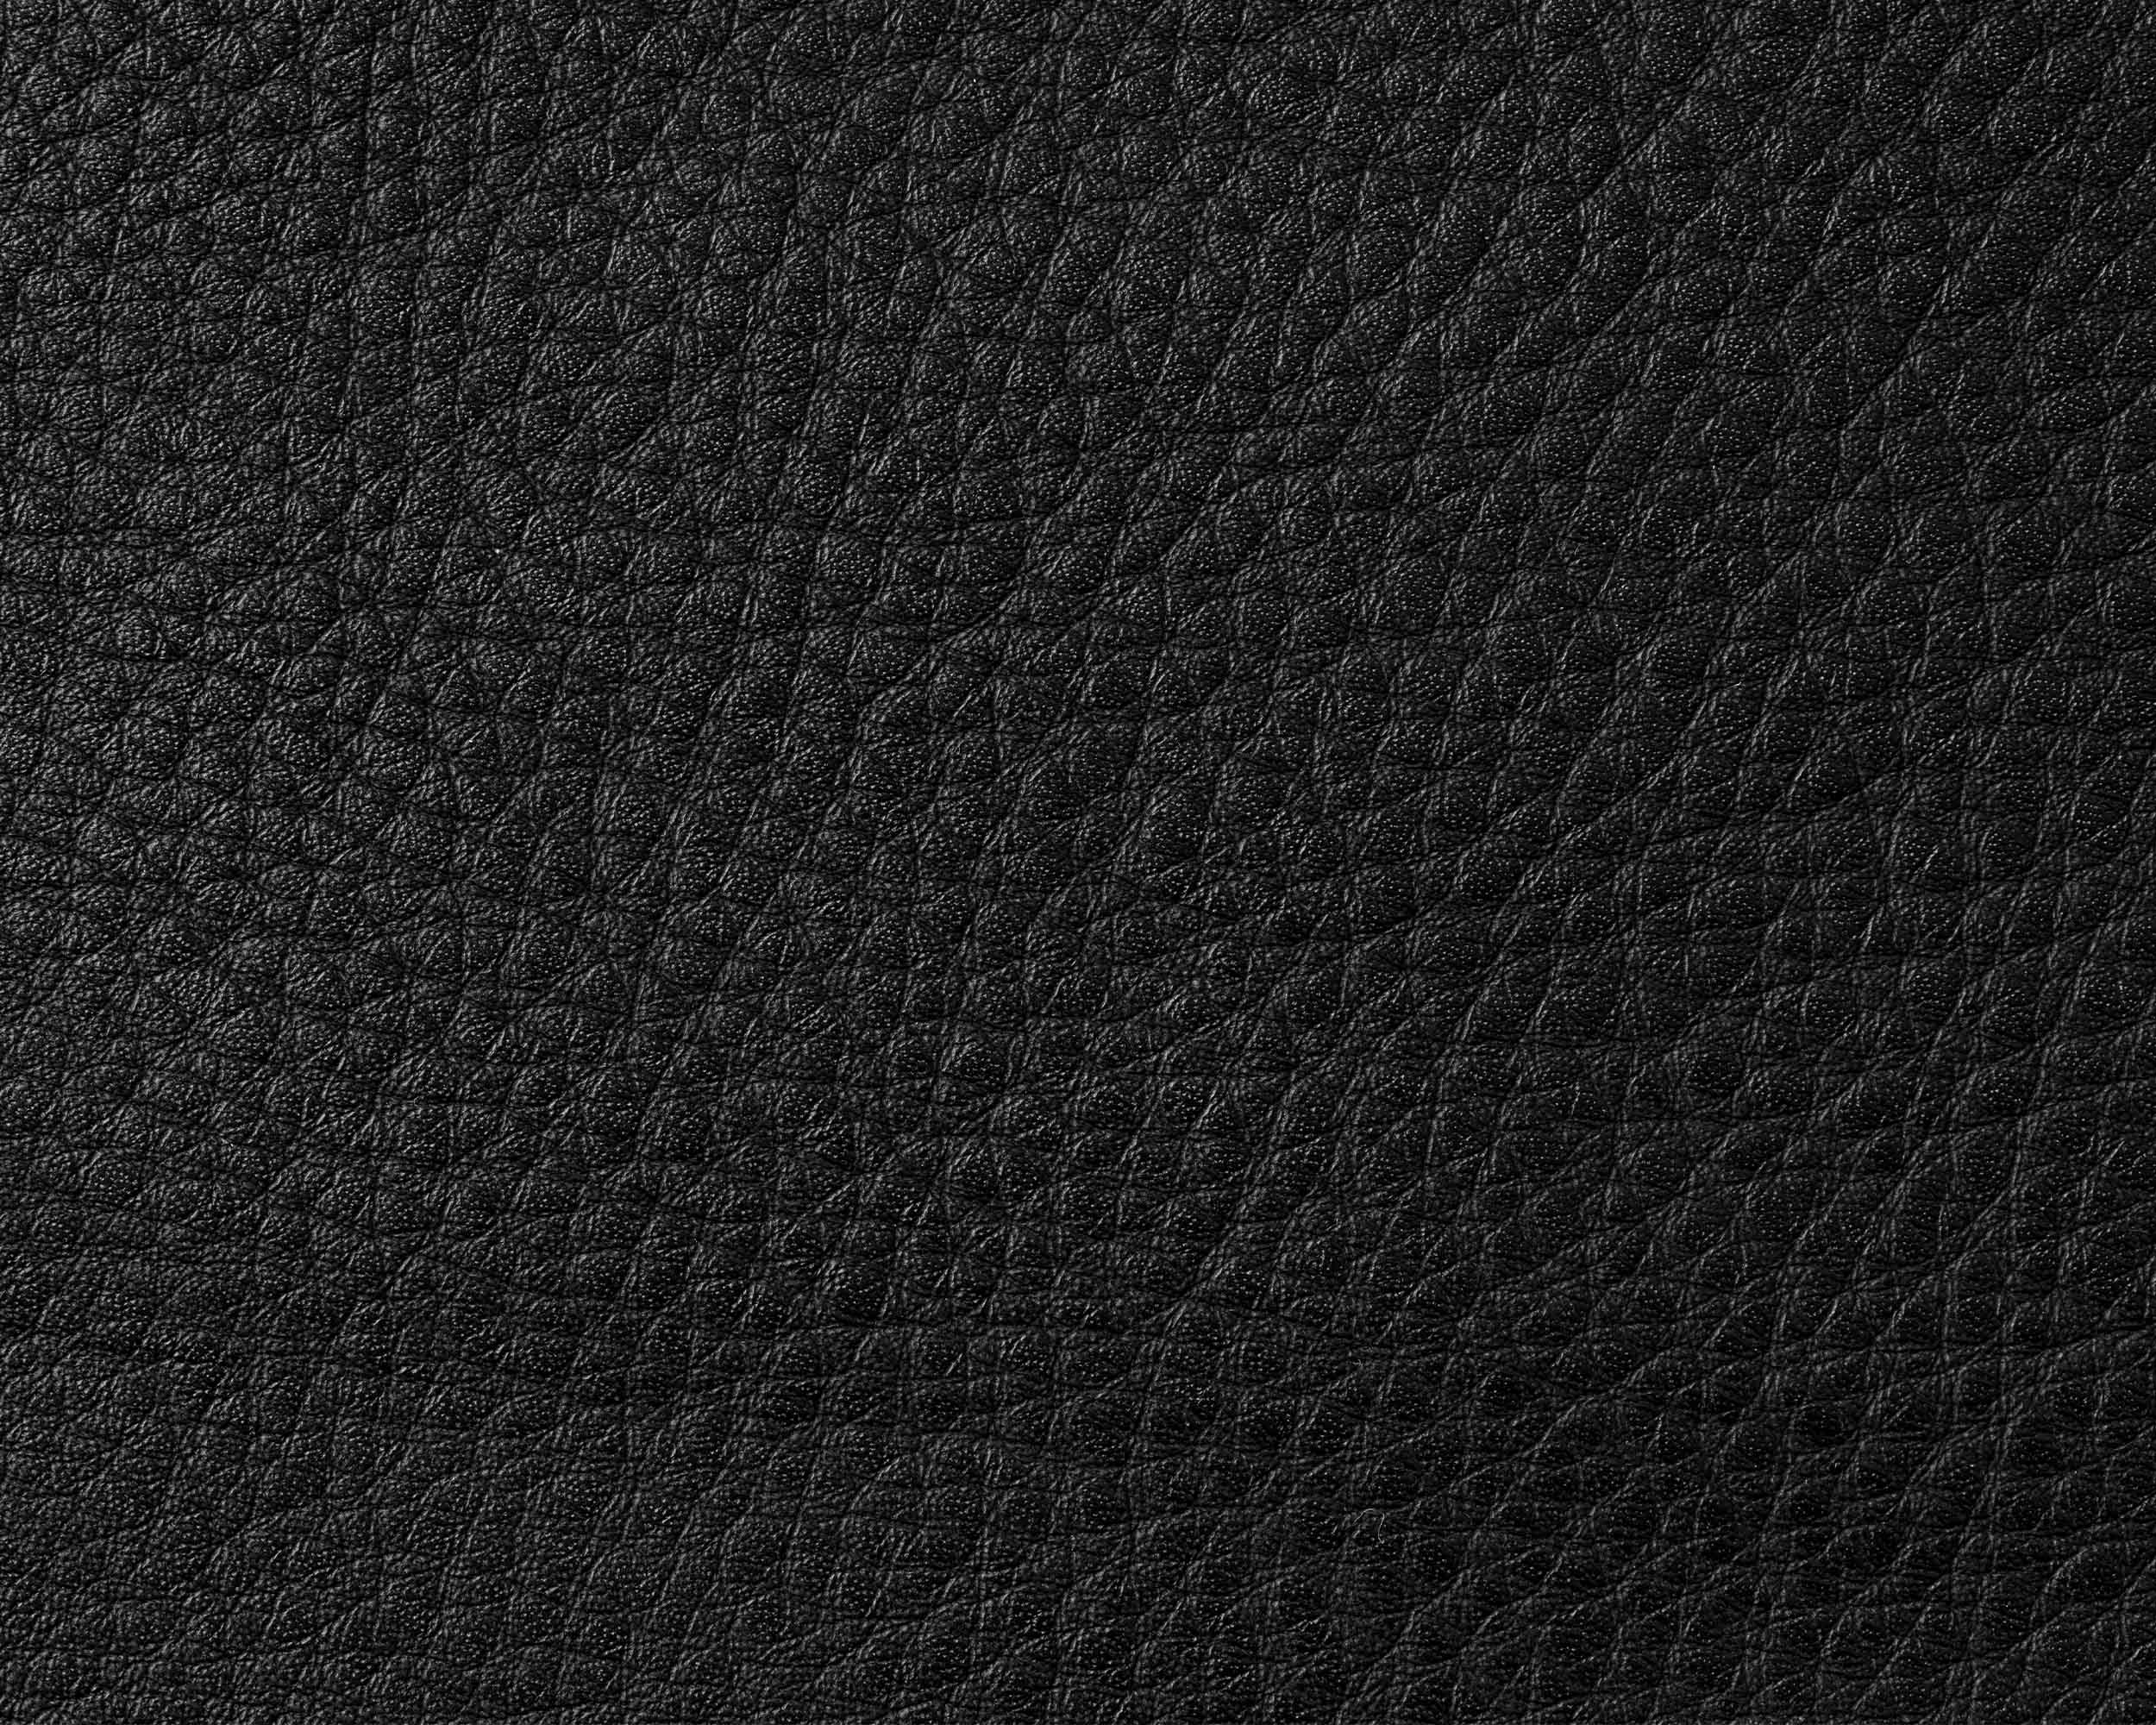 black textured leather